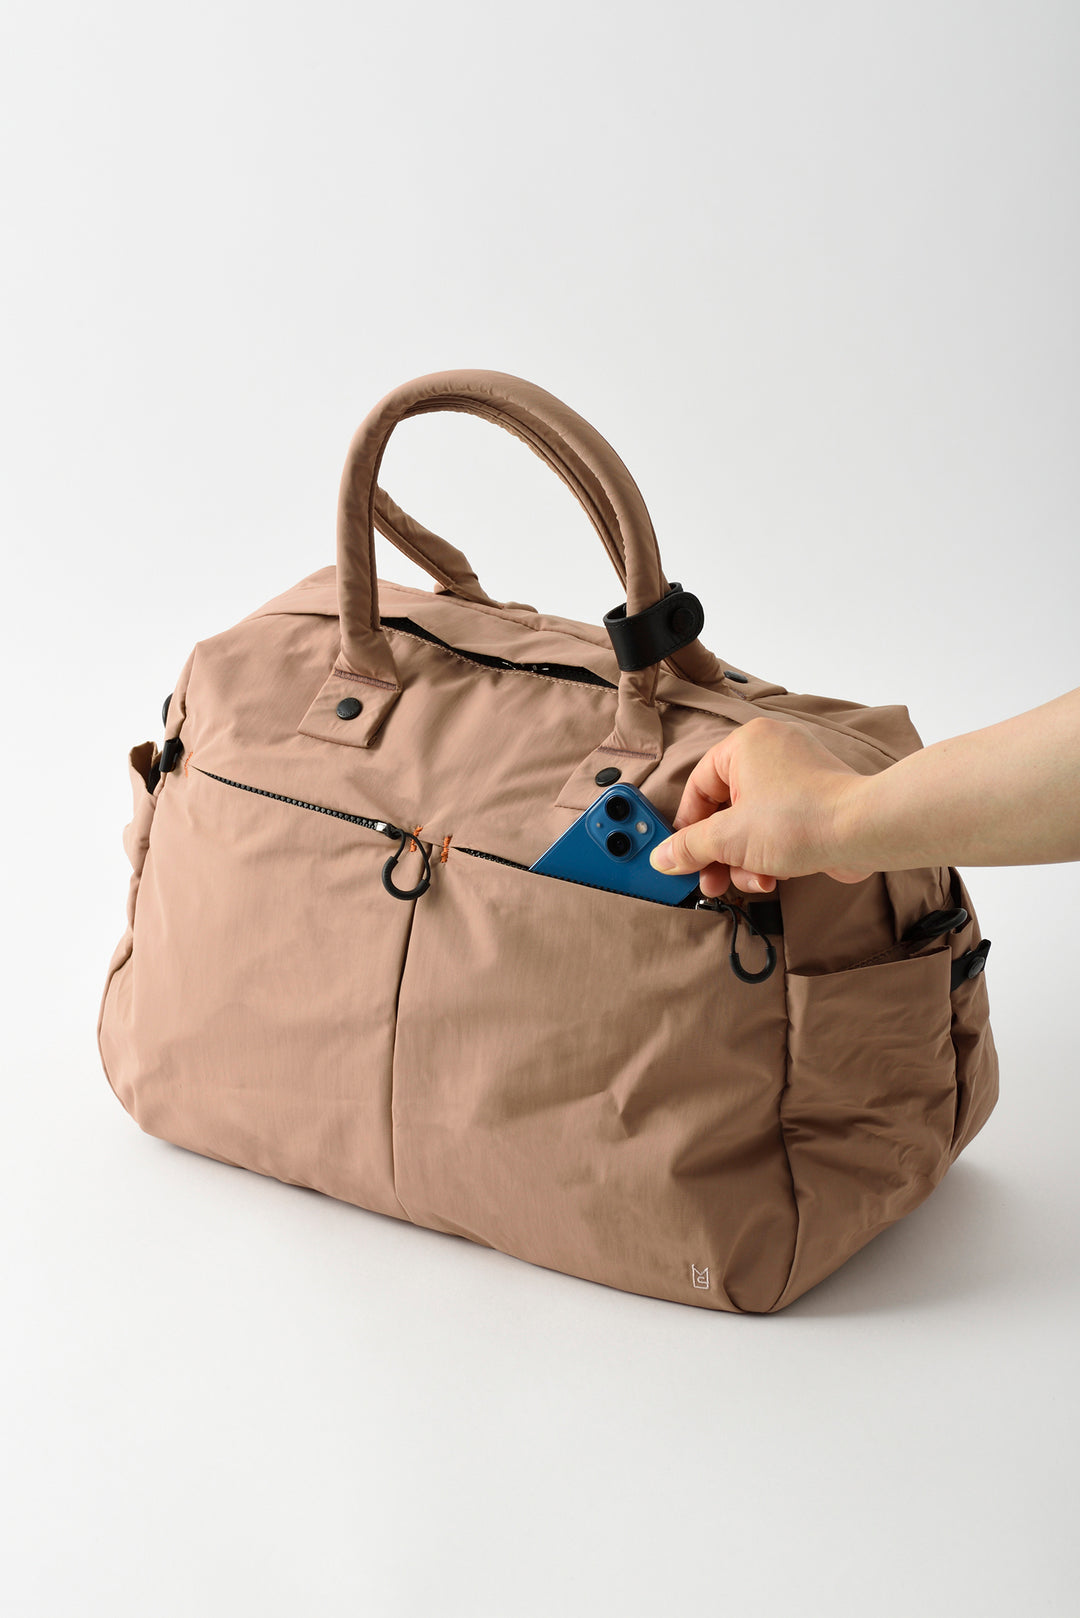 MILESTO TROT Duffle Bag (S) - Khaki